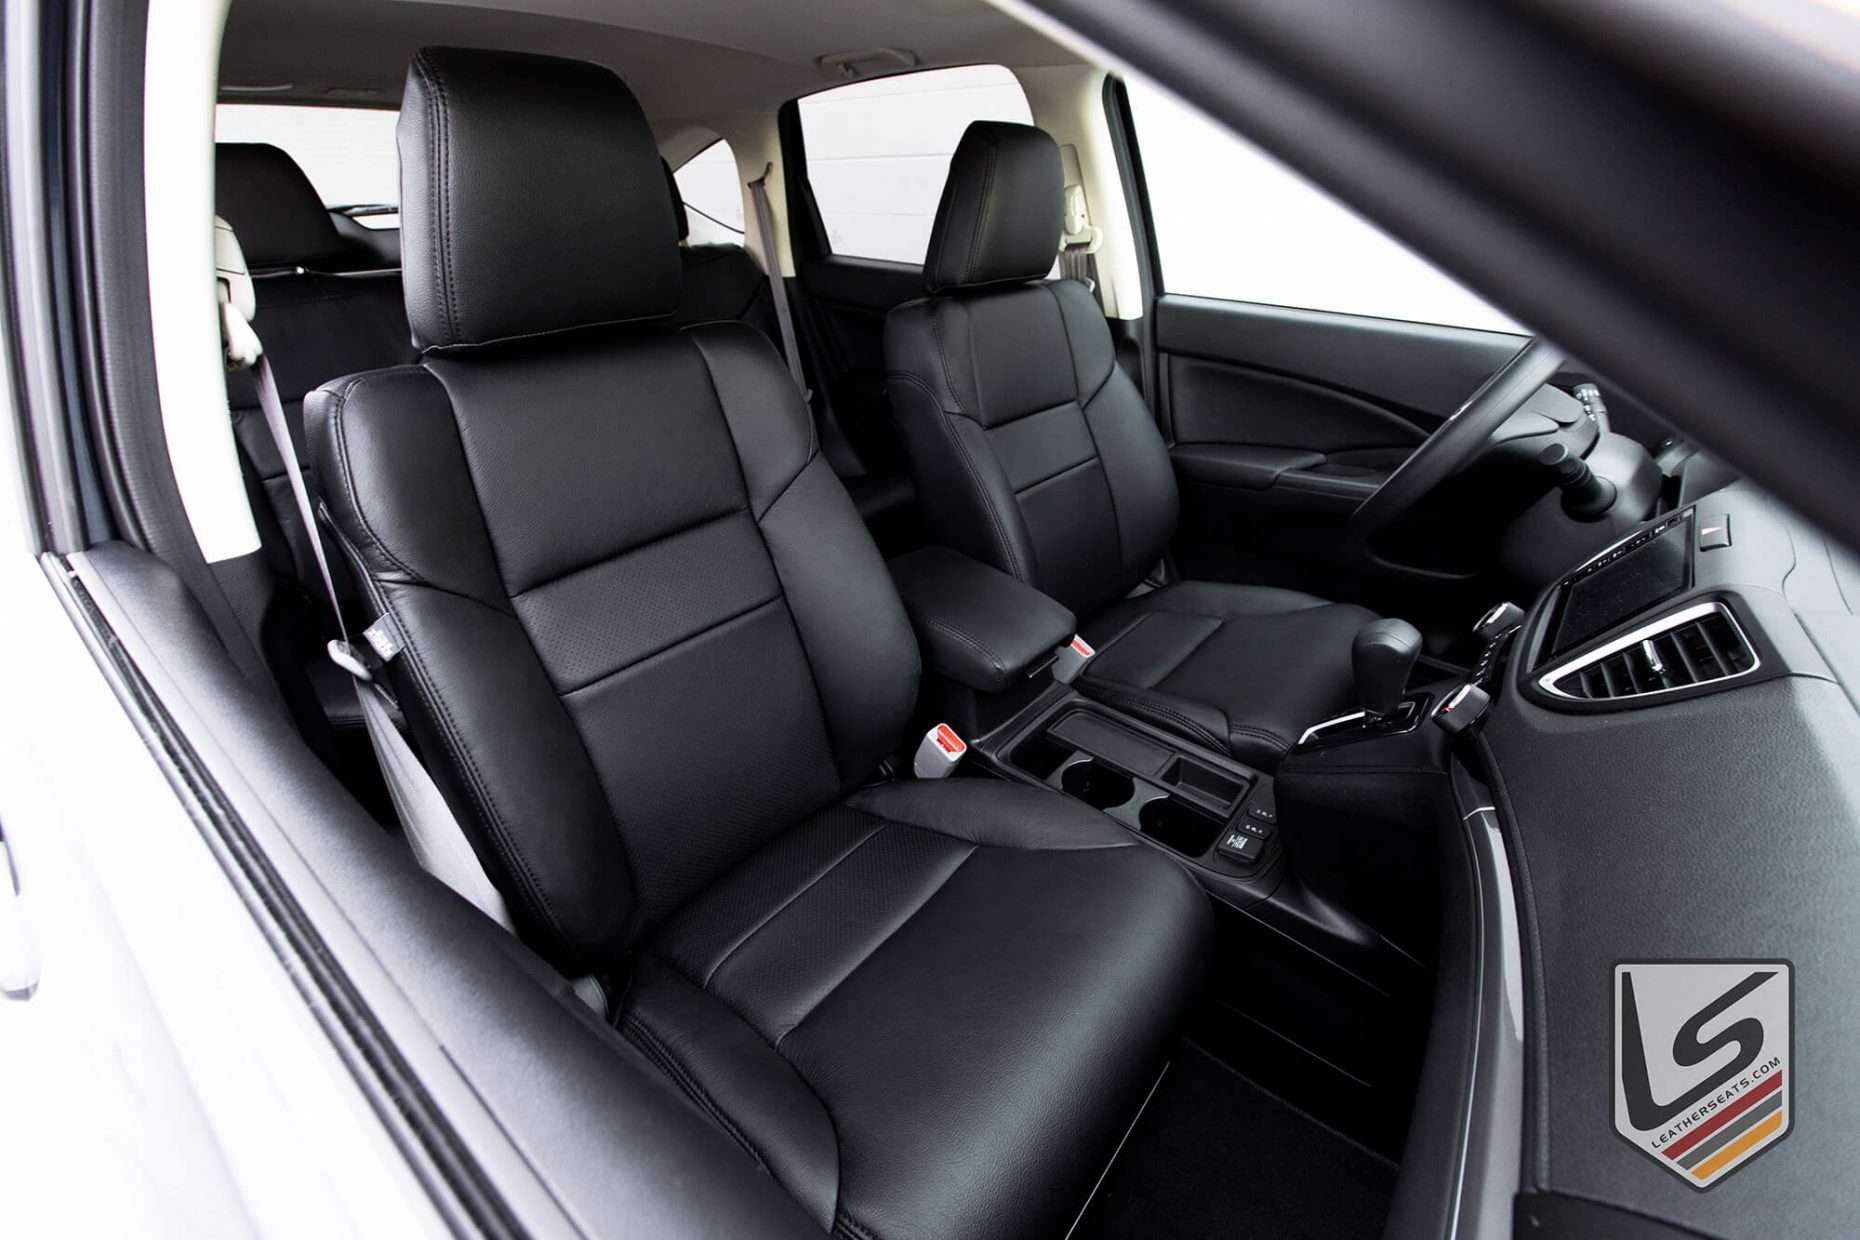 Leatherseats.com Honda CR-V SUV Leather Interior in Black